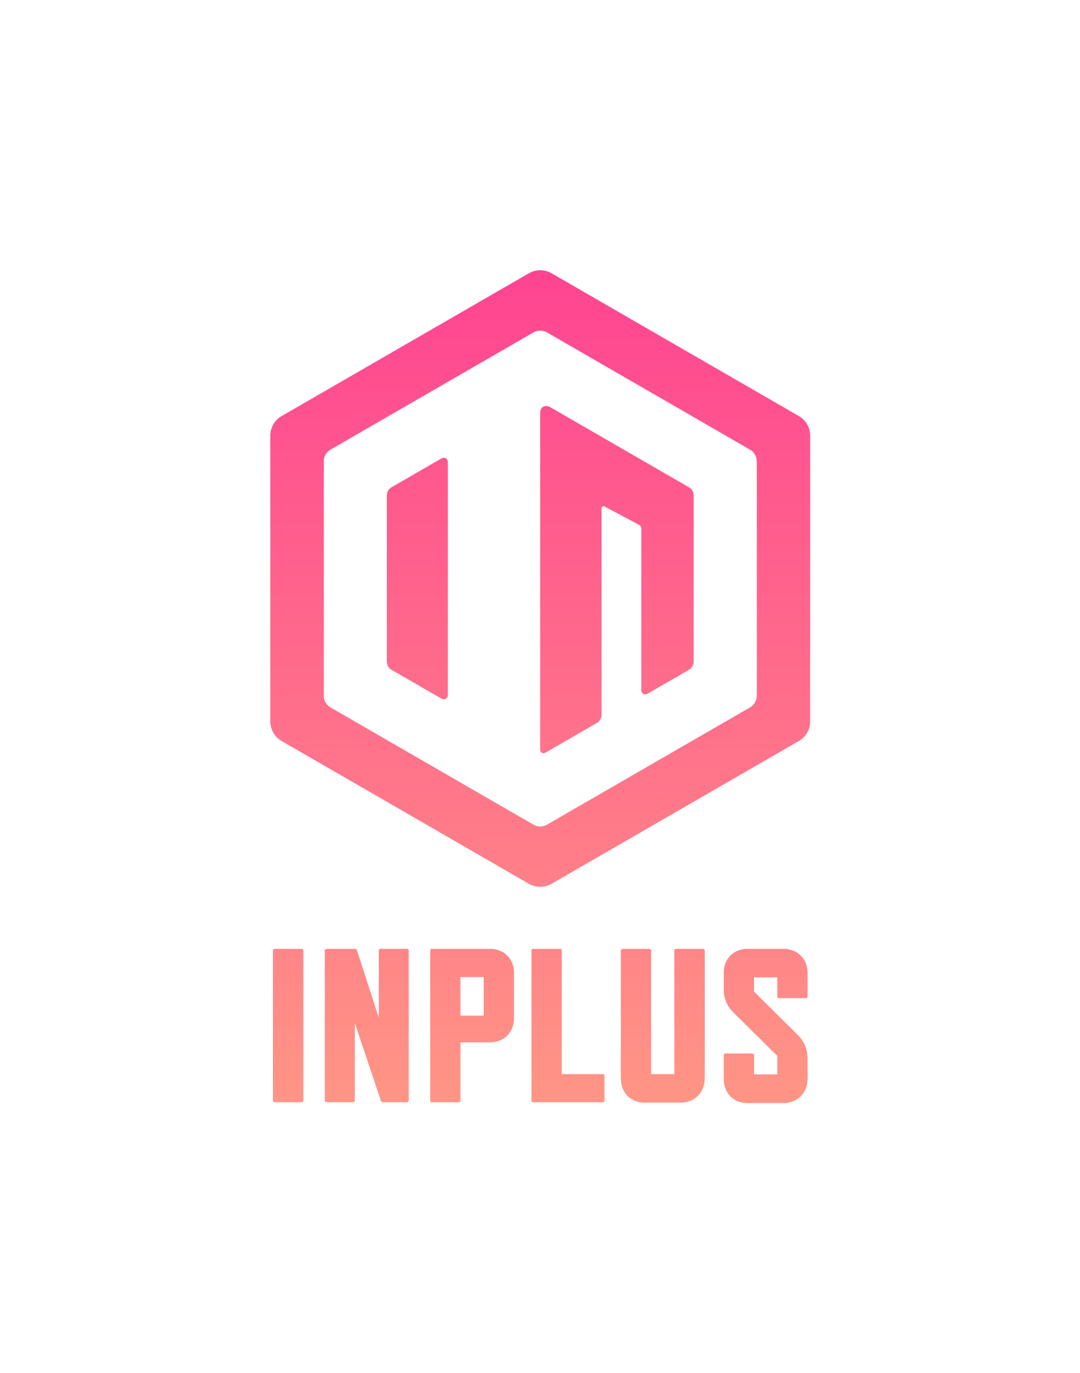 INPLUS Logo Assets